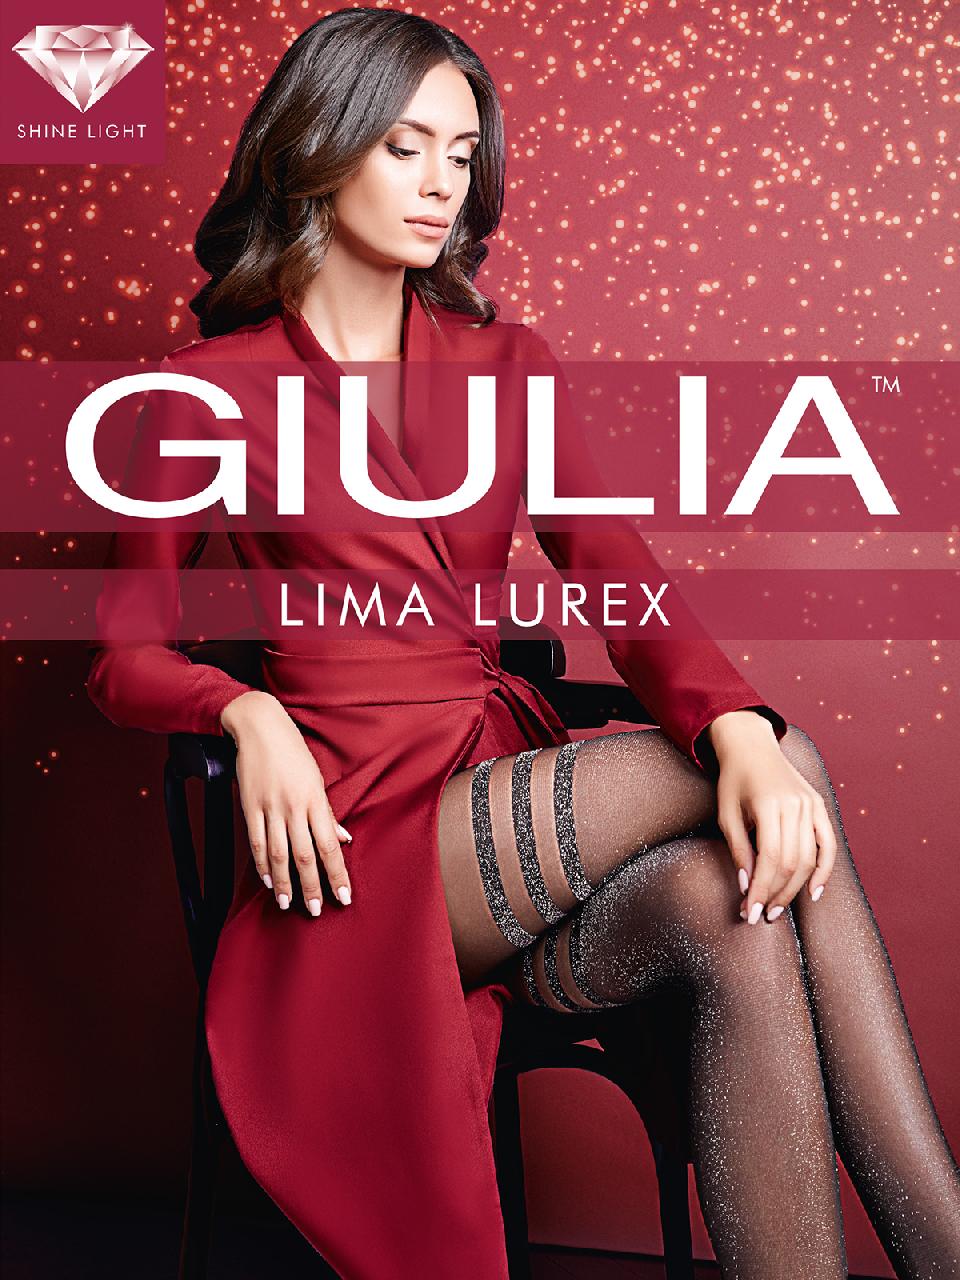 Giulia Lima Lurex 02 nero 3